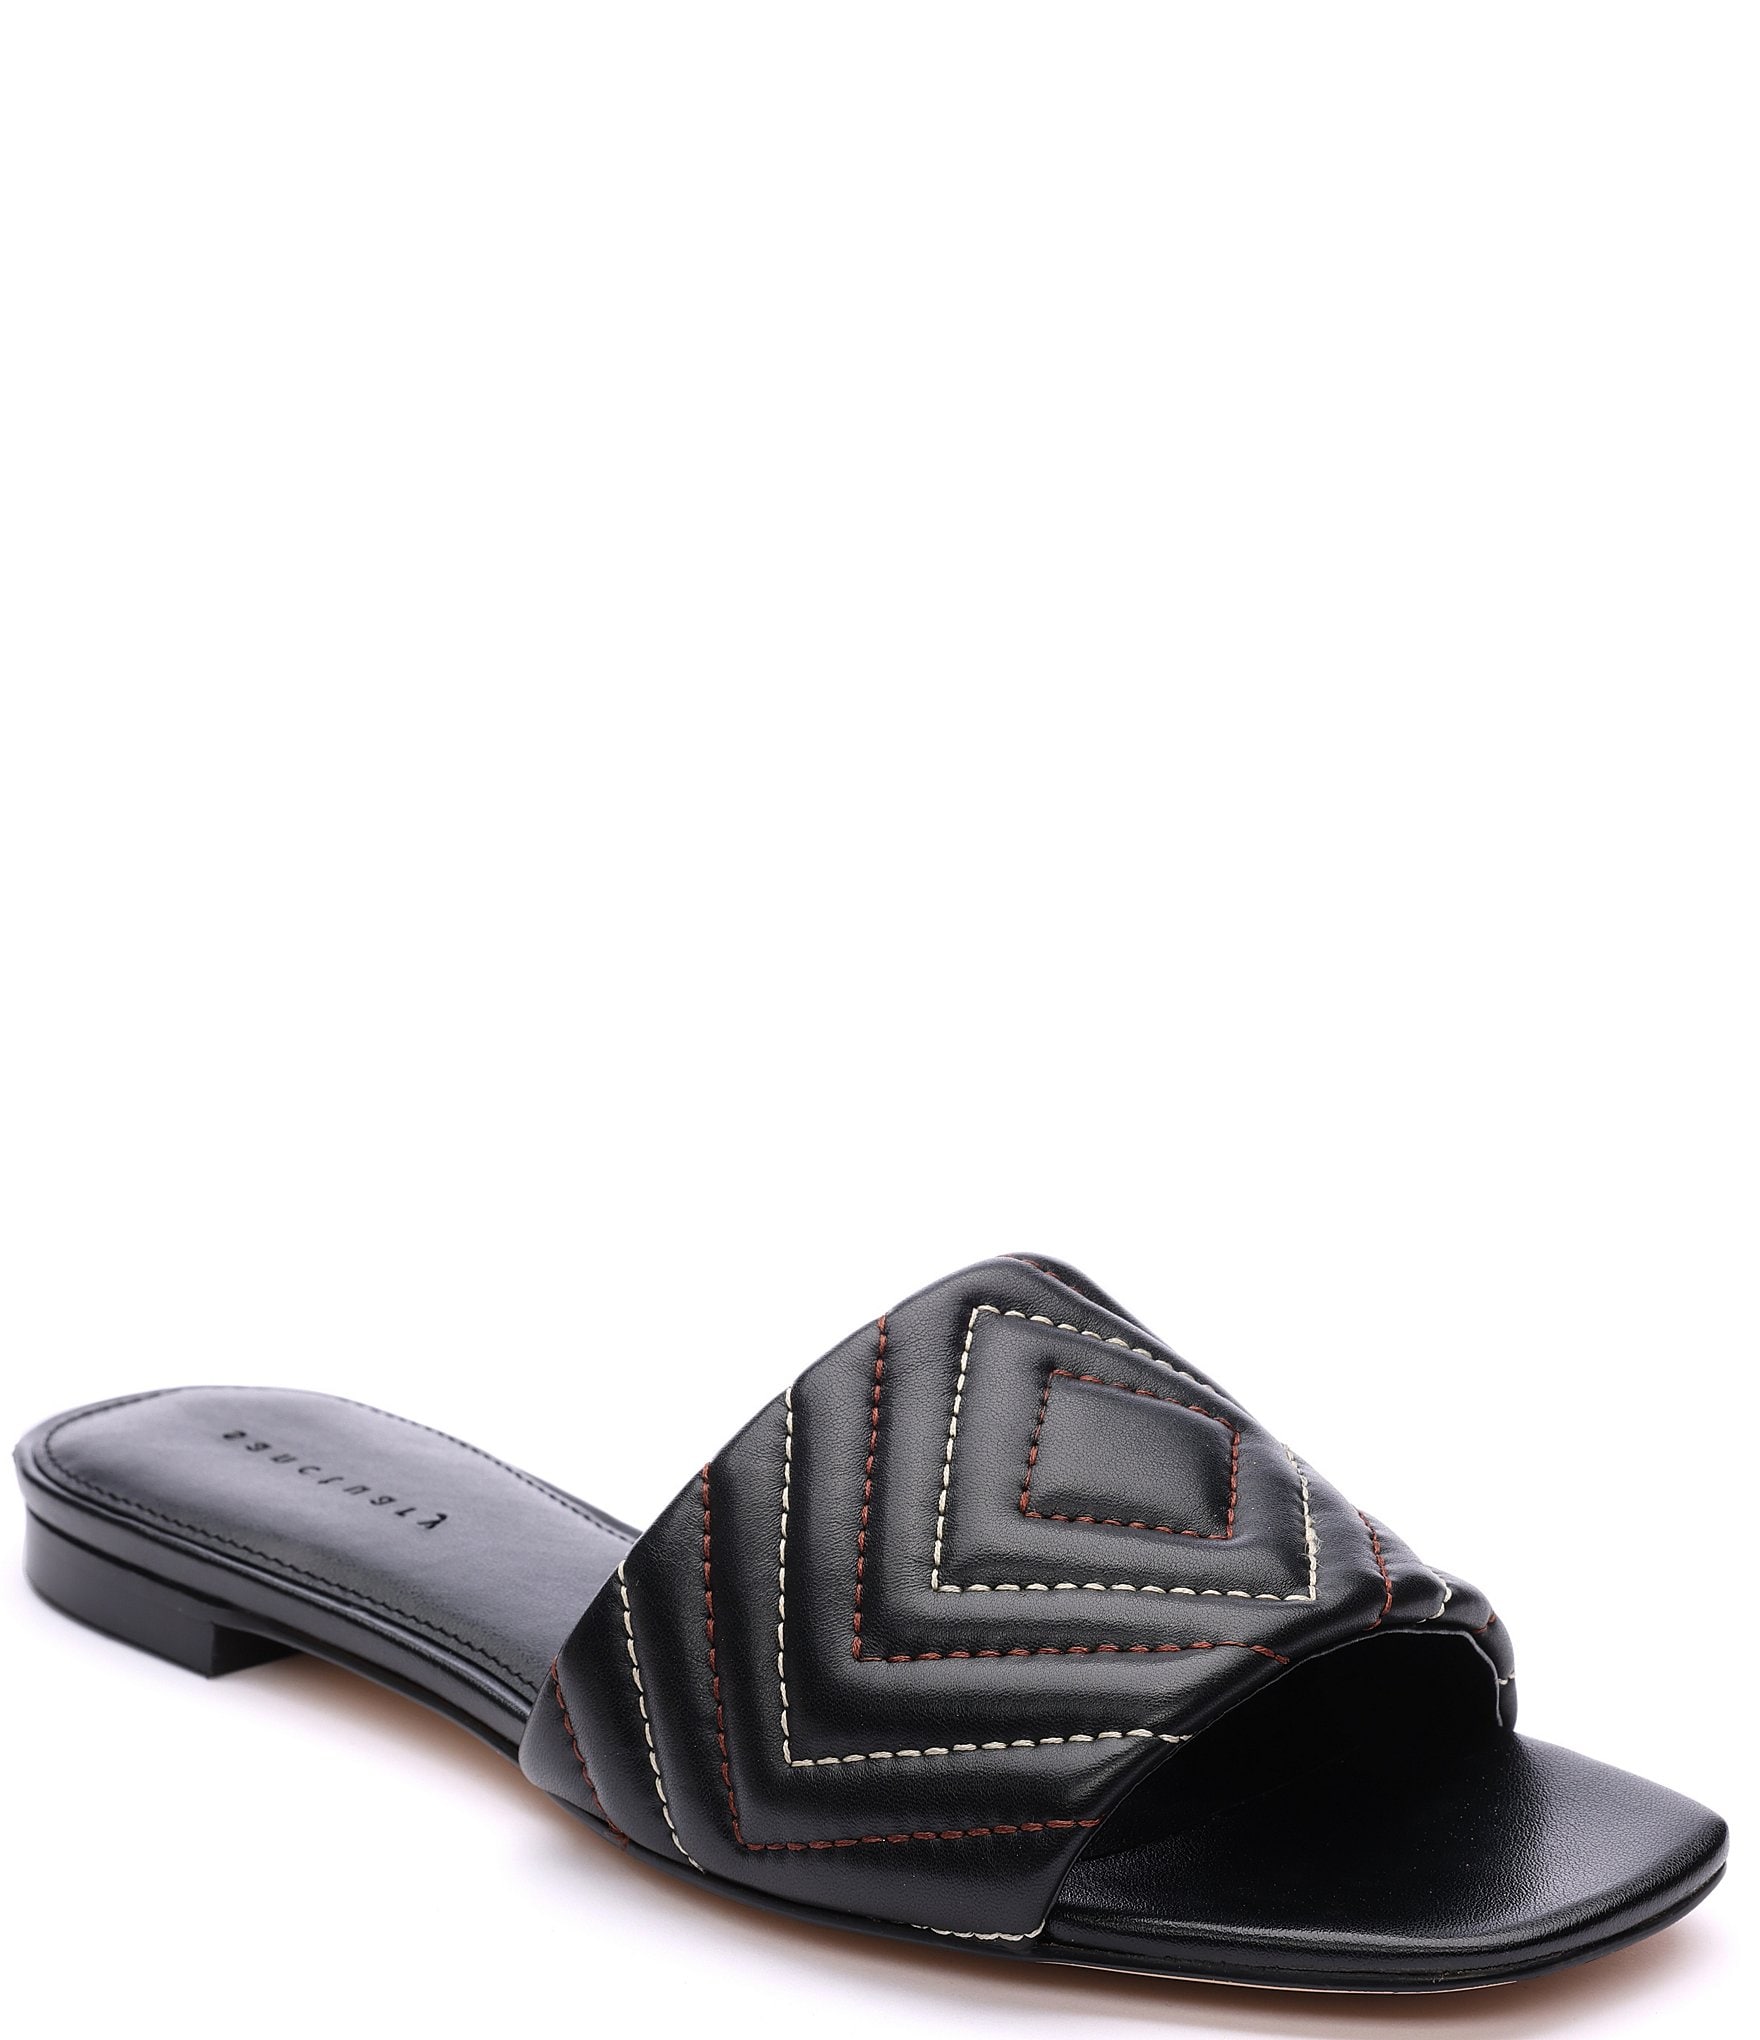 Vince Camuto Lemenda Leather Buckle Flat Slide Sandals - 5.5M